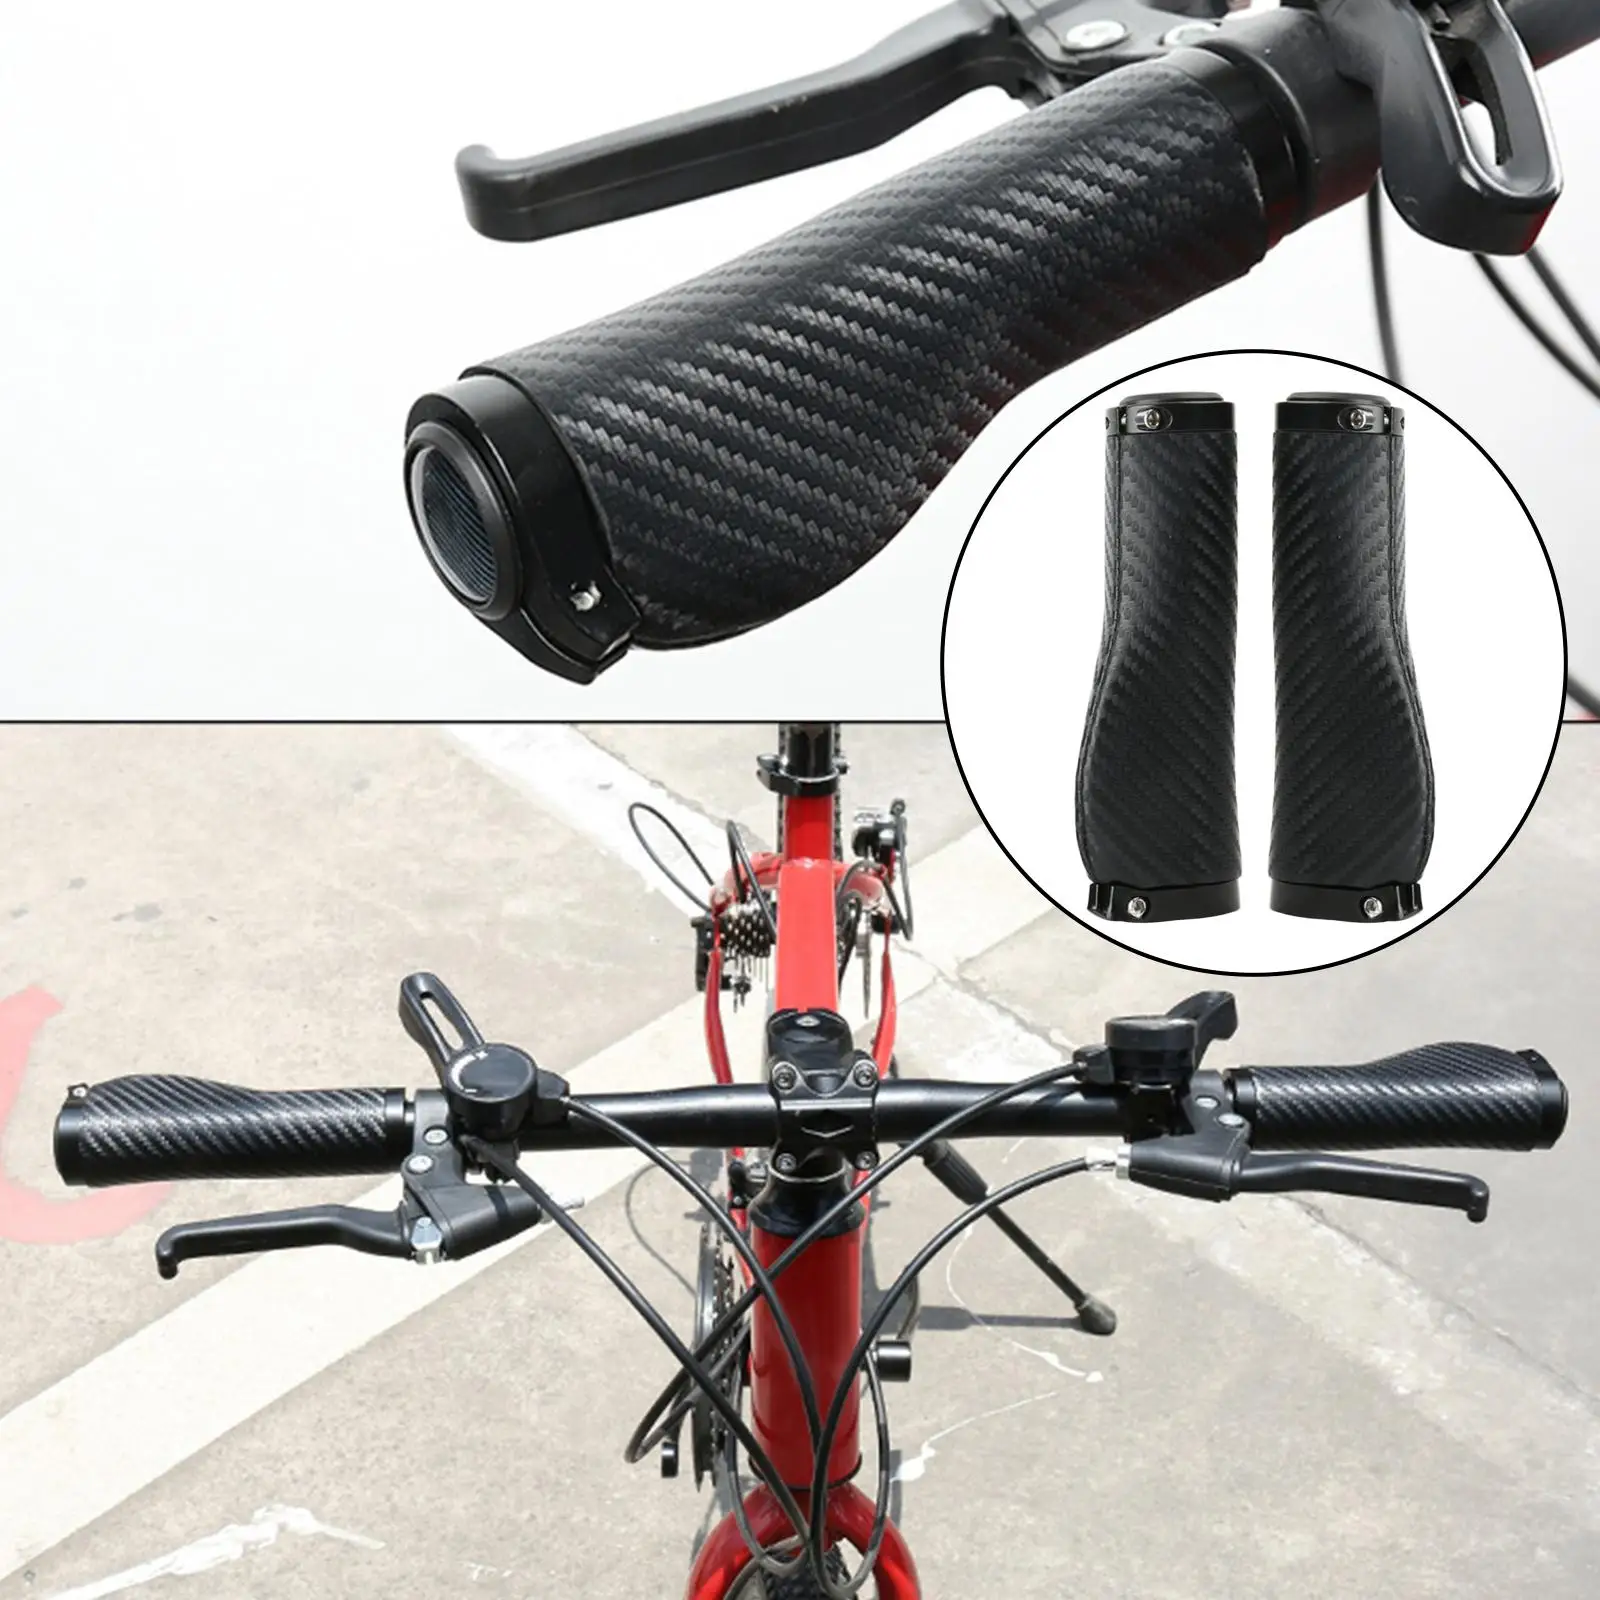 2x PU Mountain Bike Handlebar Grips Lockable Anti Skid Bar Grips